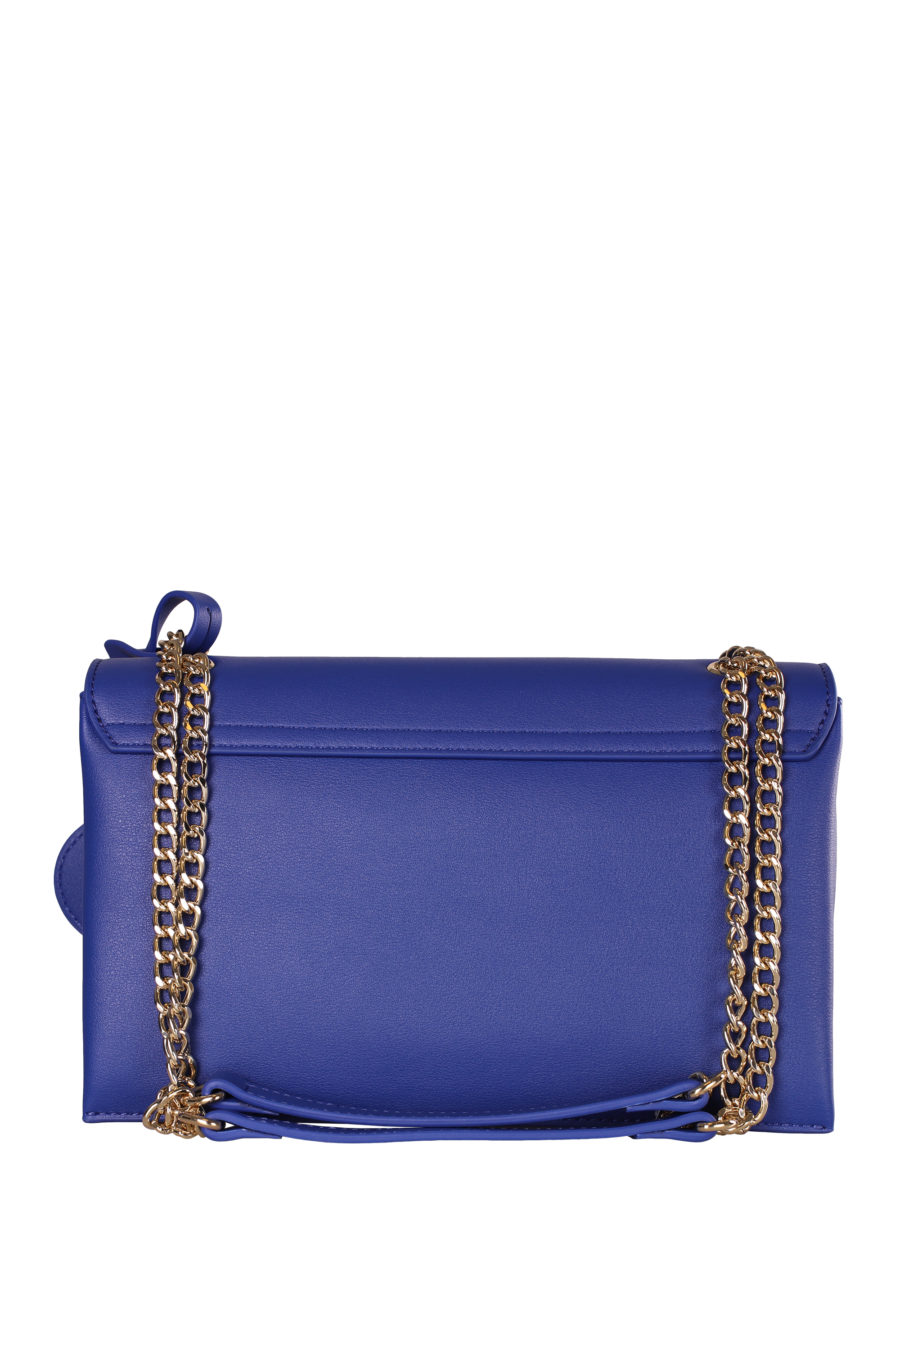 Bolso azul mediano con cadena dorada - IMG 4801